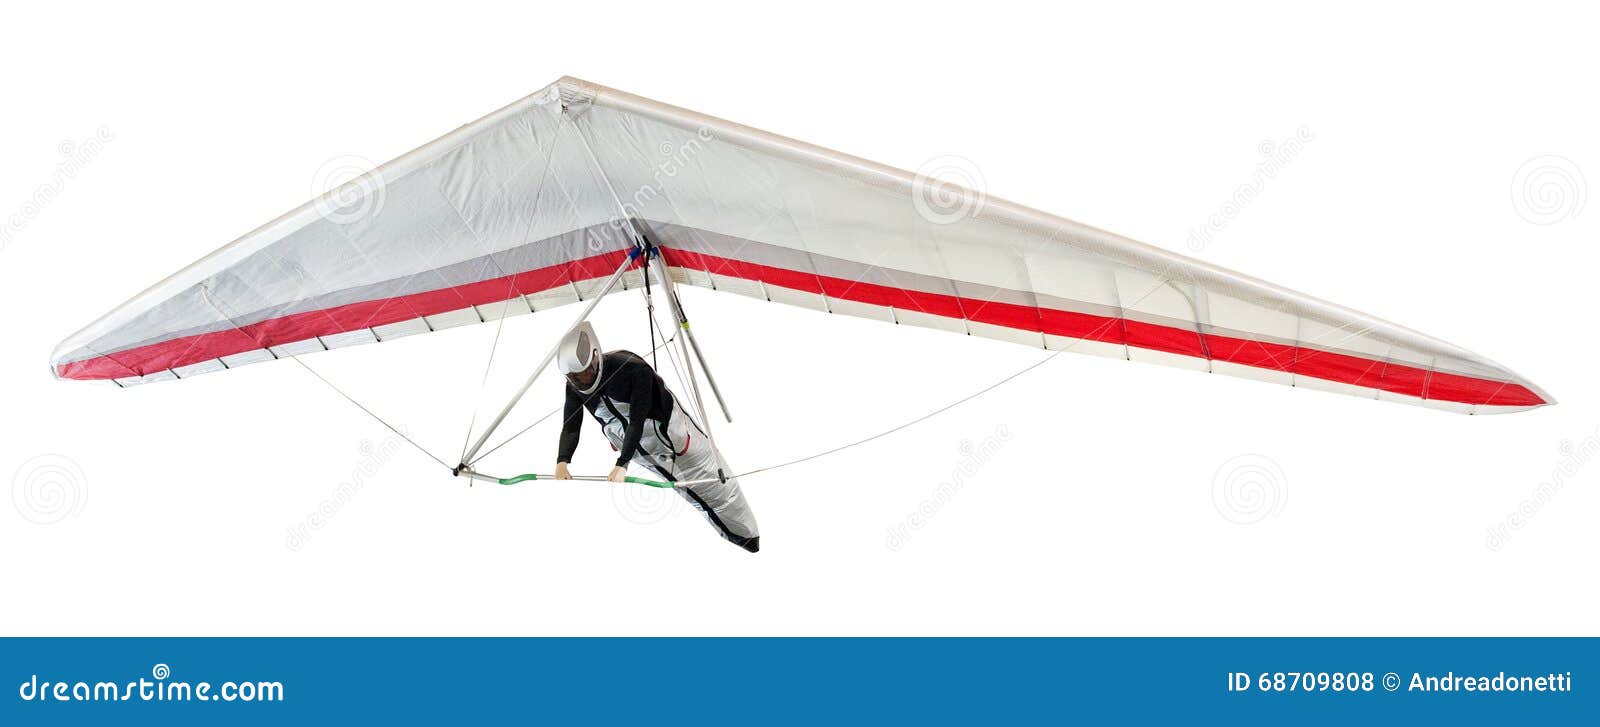 hang glider soaring the thermal updrafts